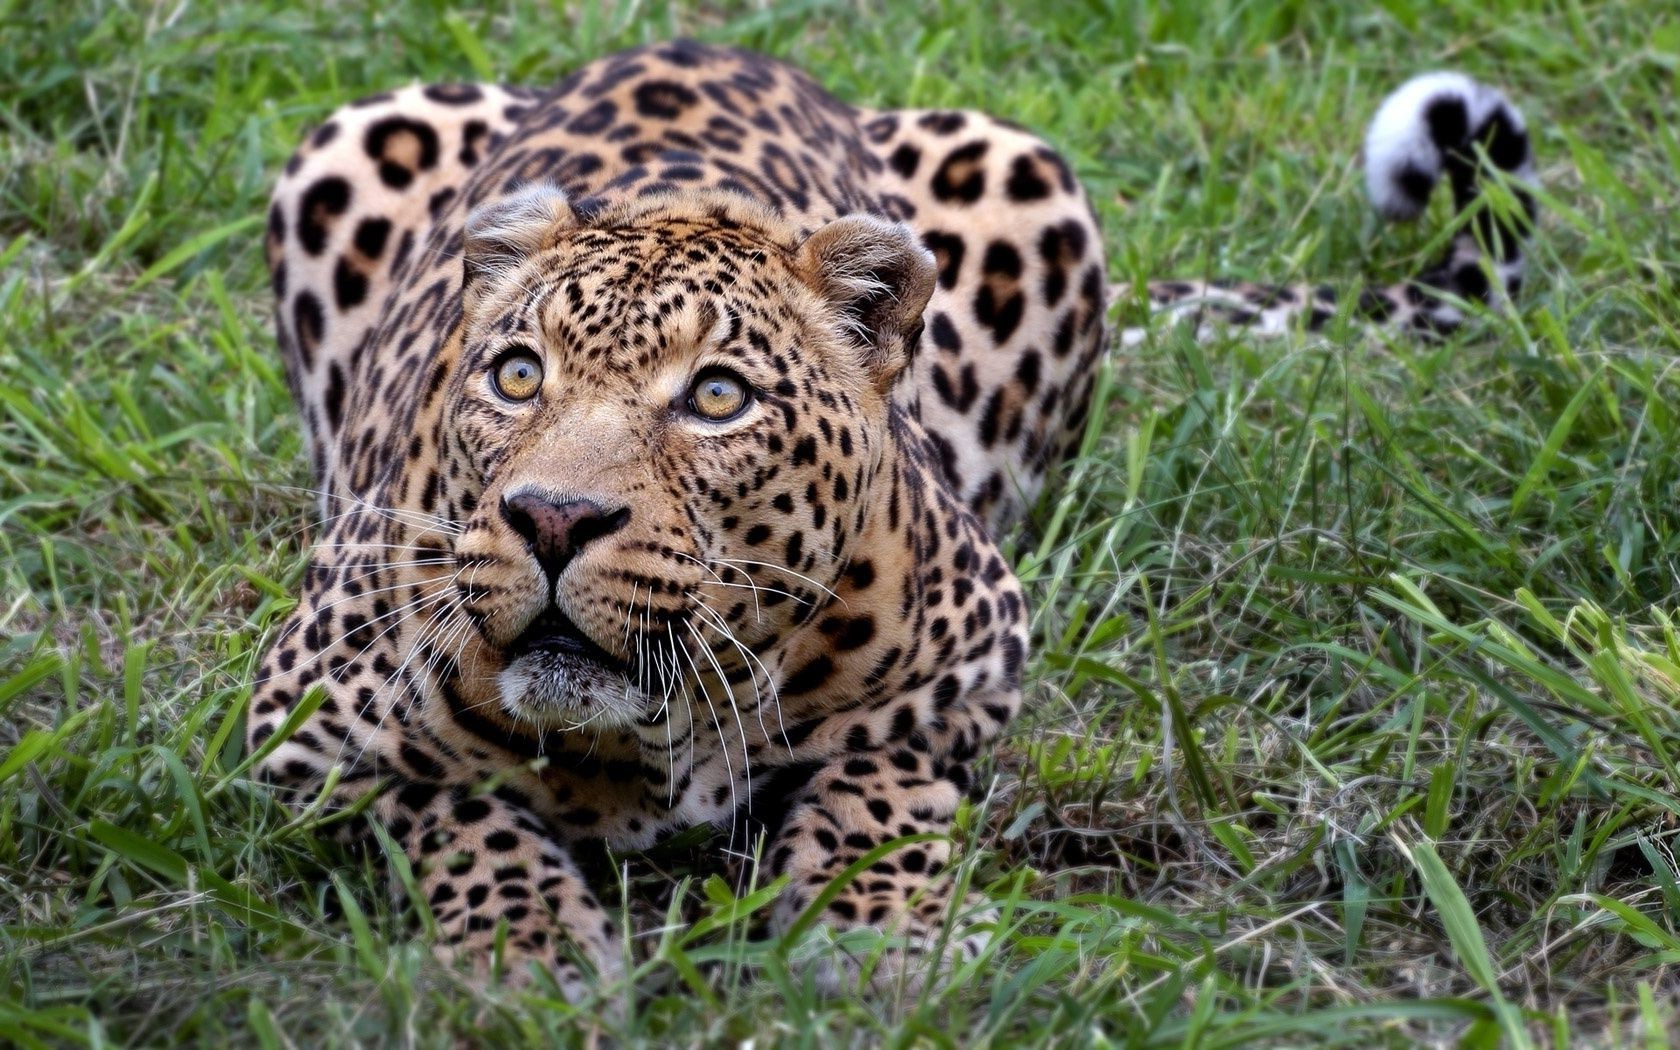 leopards wildlife mammal cat animal carnivore wild leopard predator nature safari hunter danger